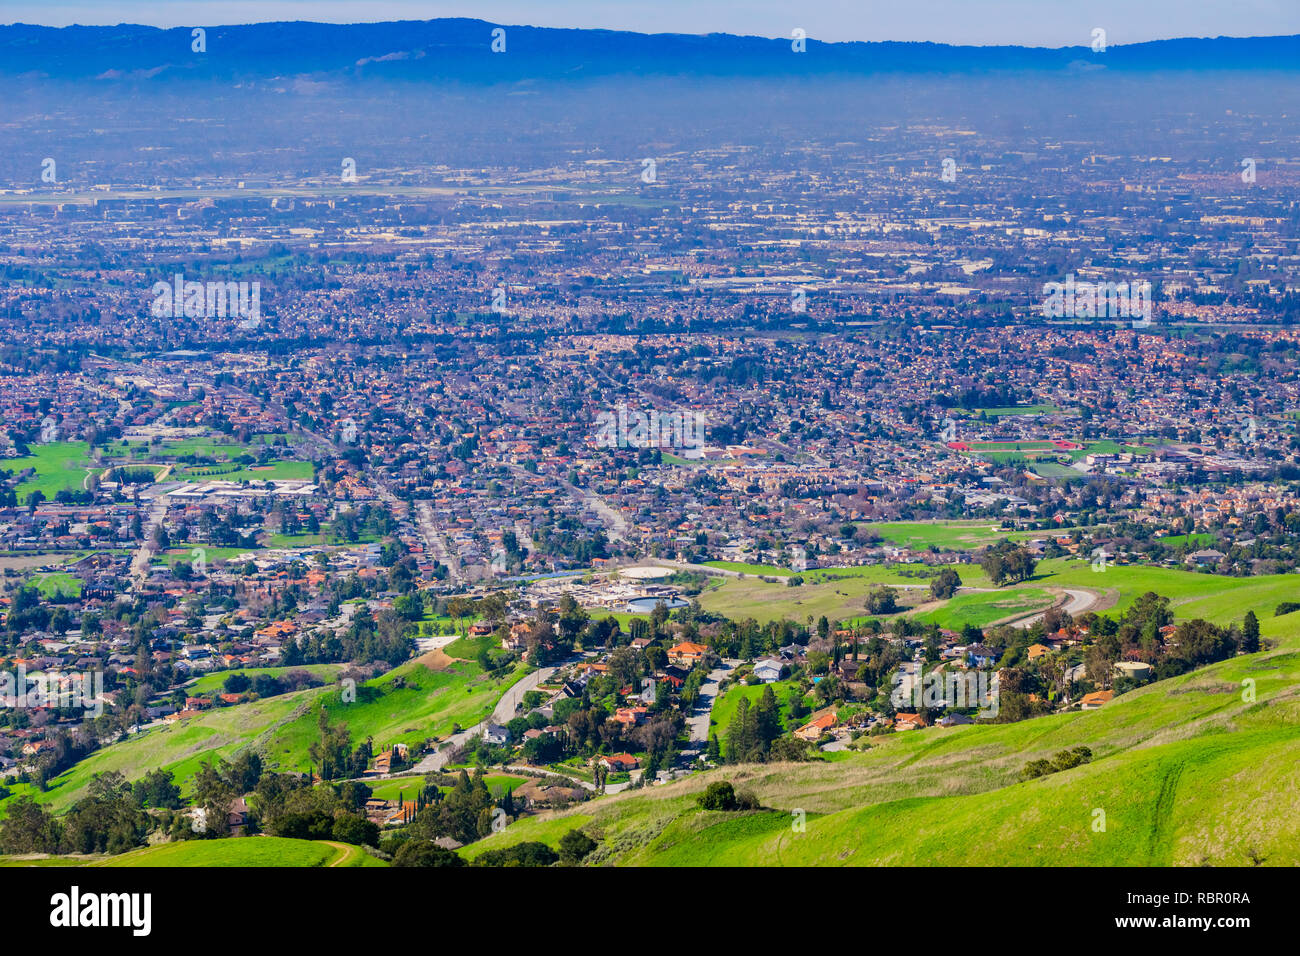 San Jose California imagem editorial. Imagem de internacional